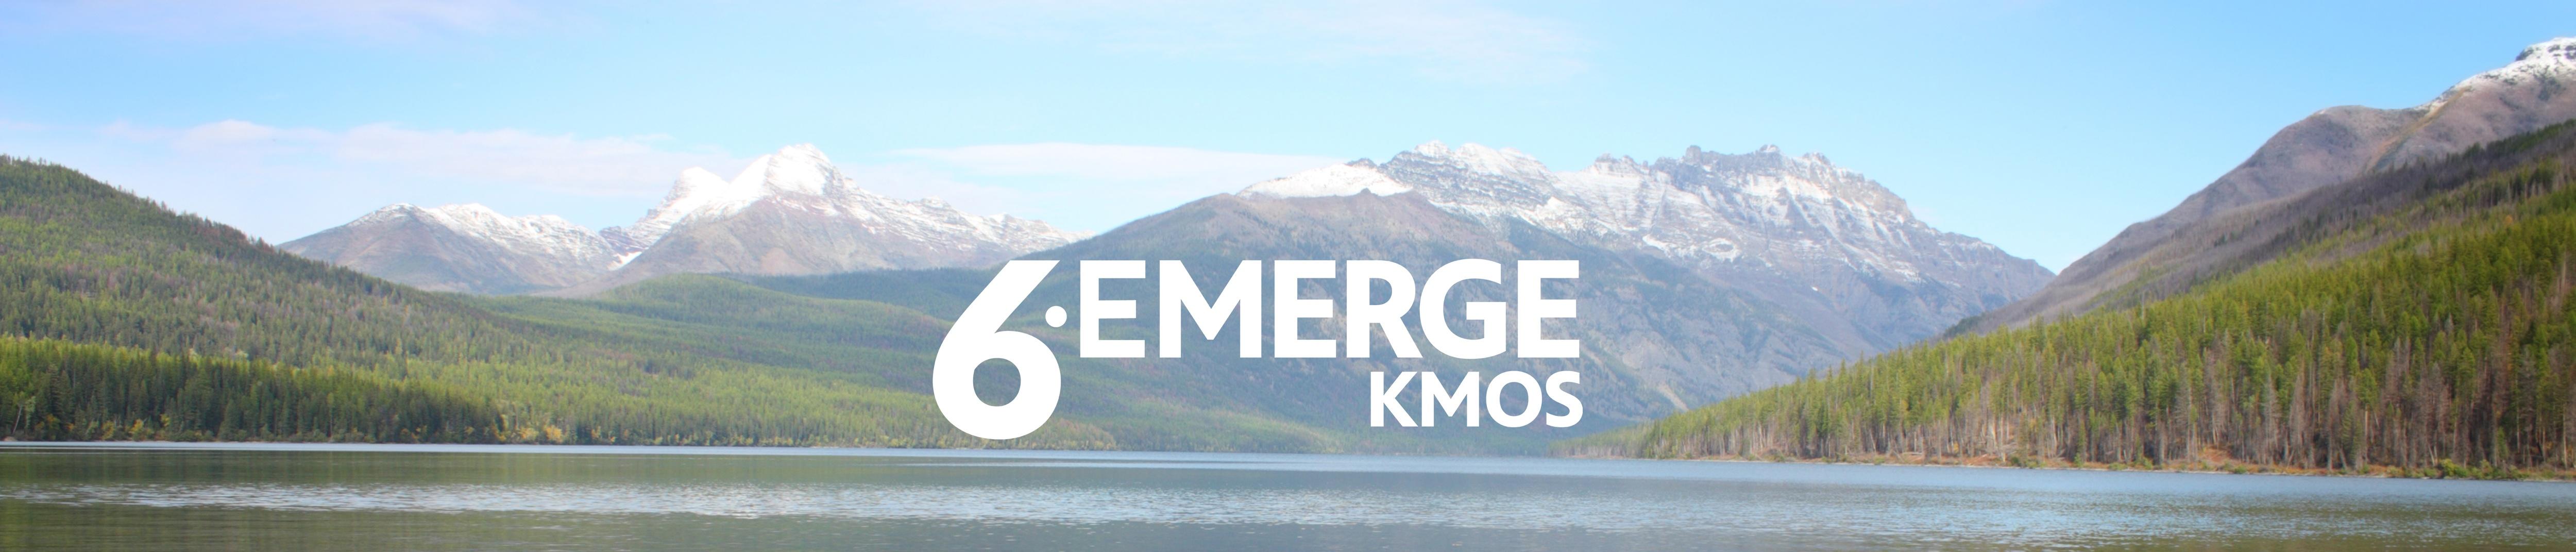 6.Emerge KMOS on image of lake and mountains